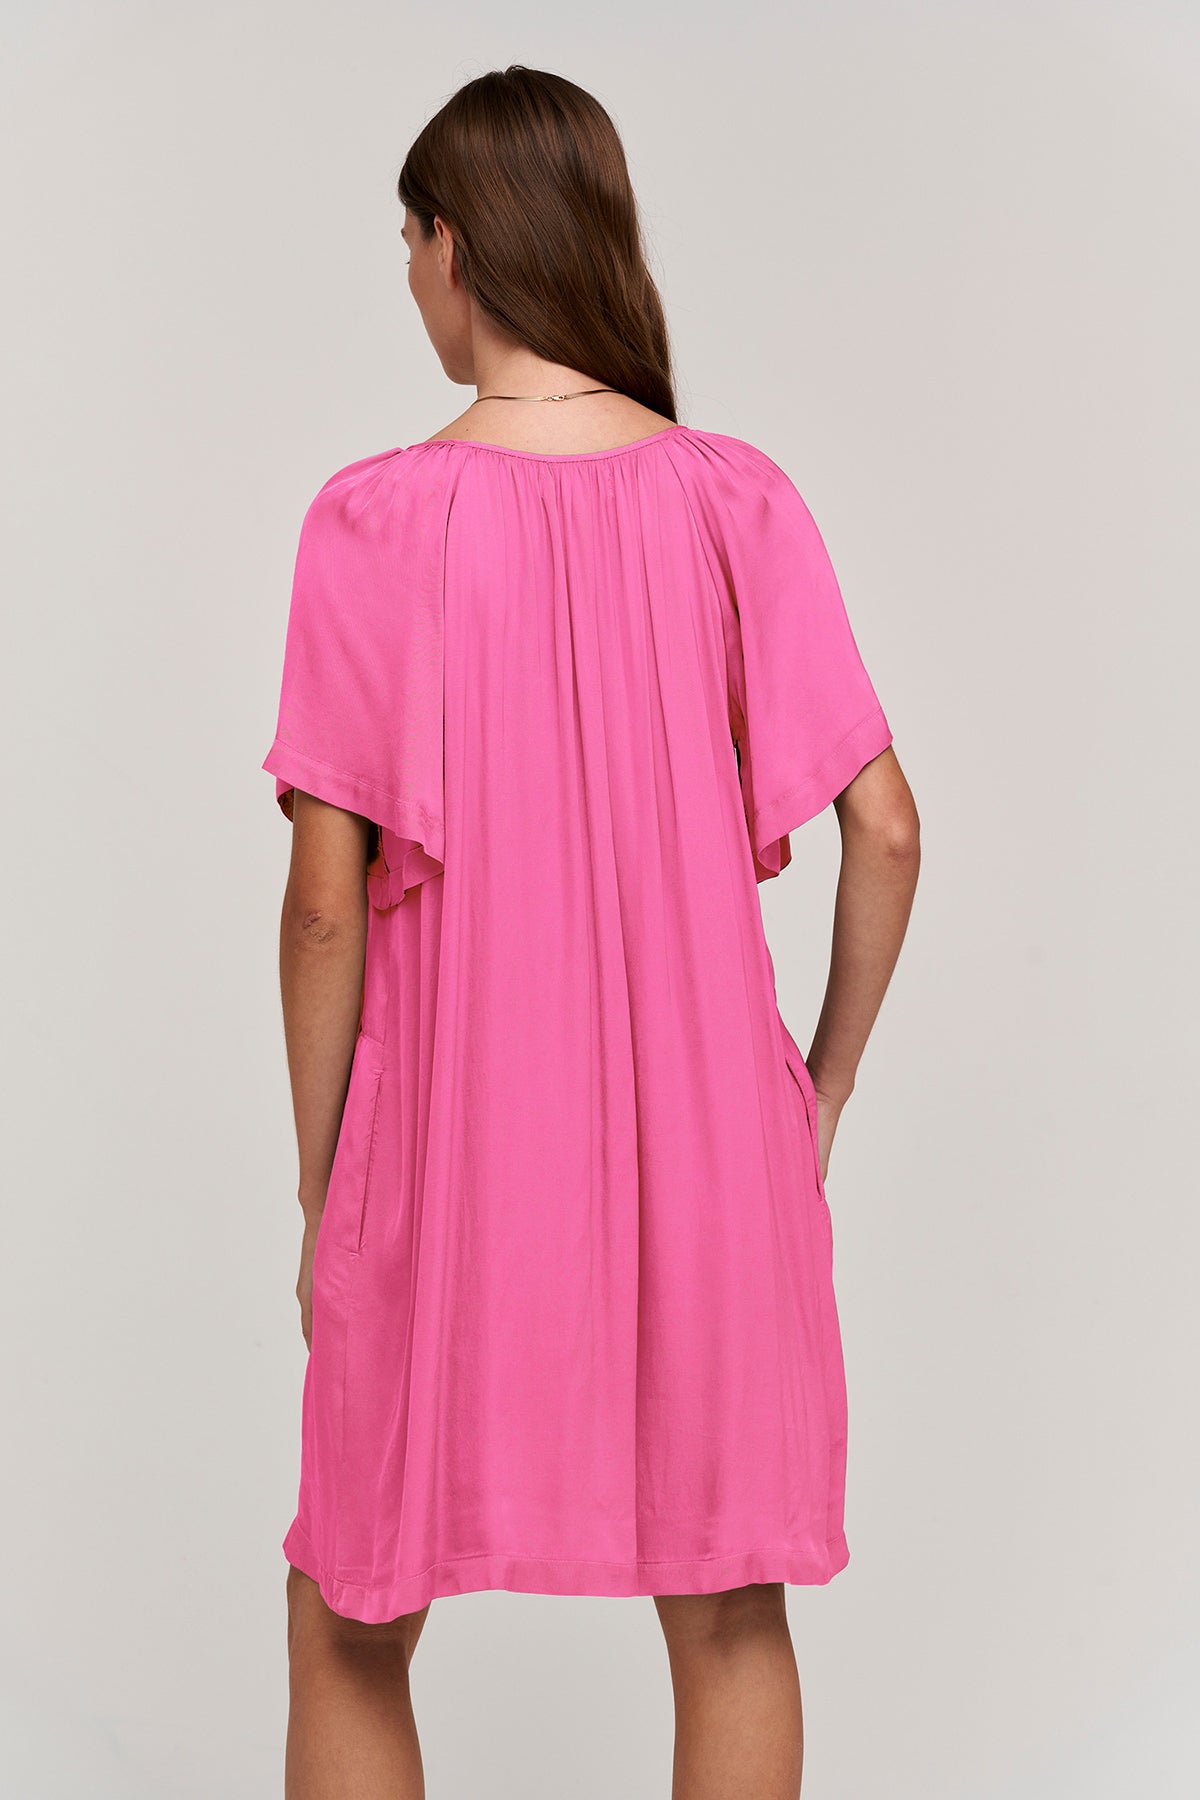 Suzanna satin viscose dress in candy pink back.-24782595457217